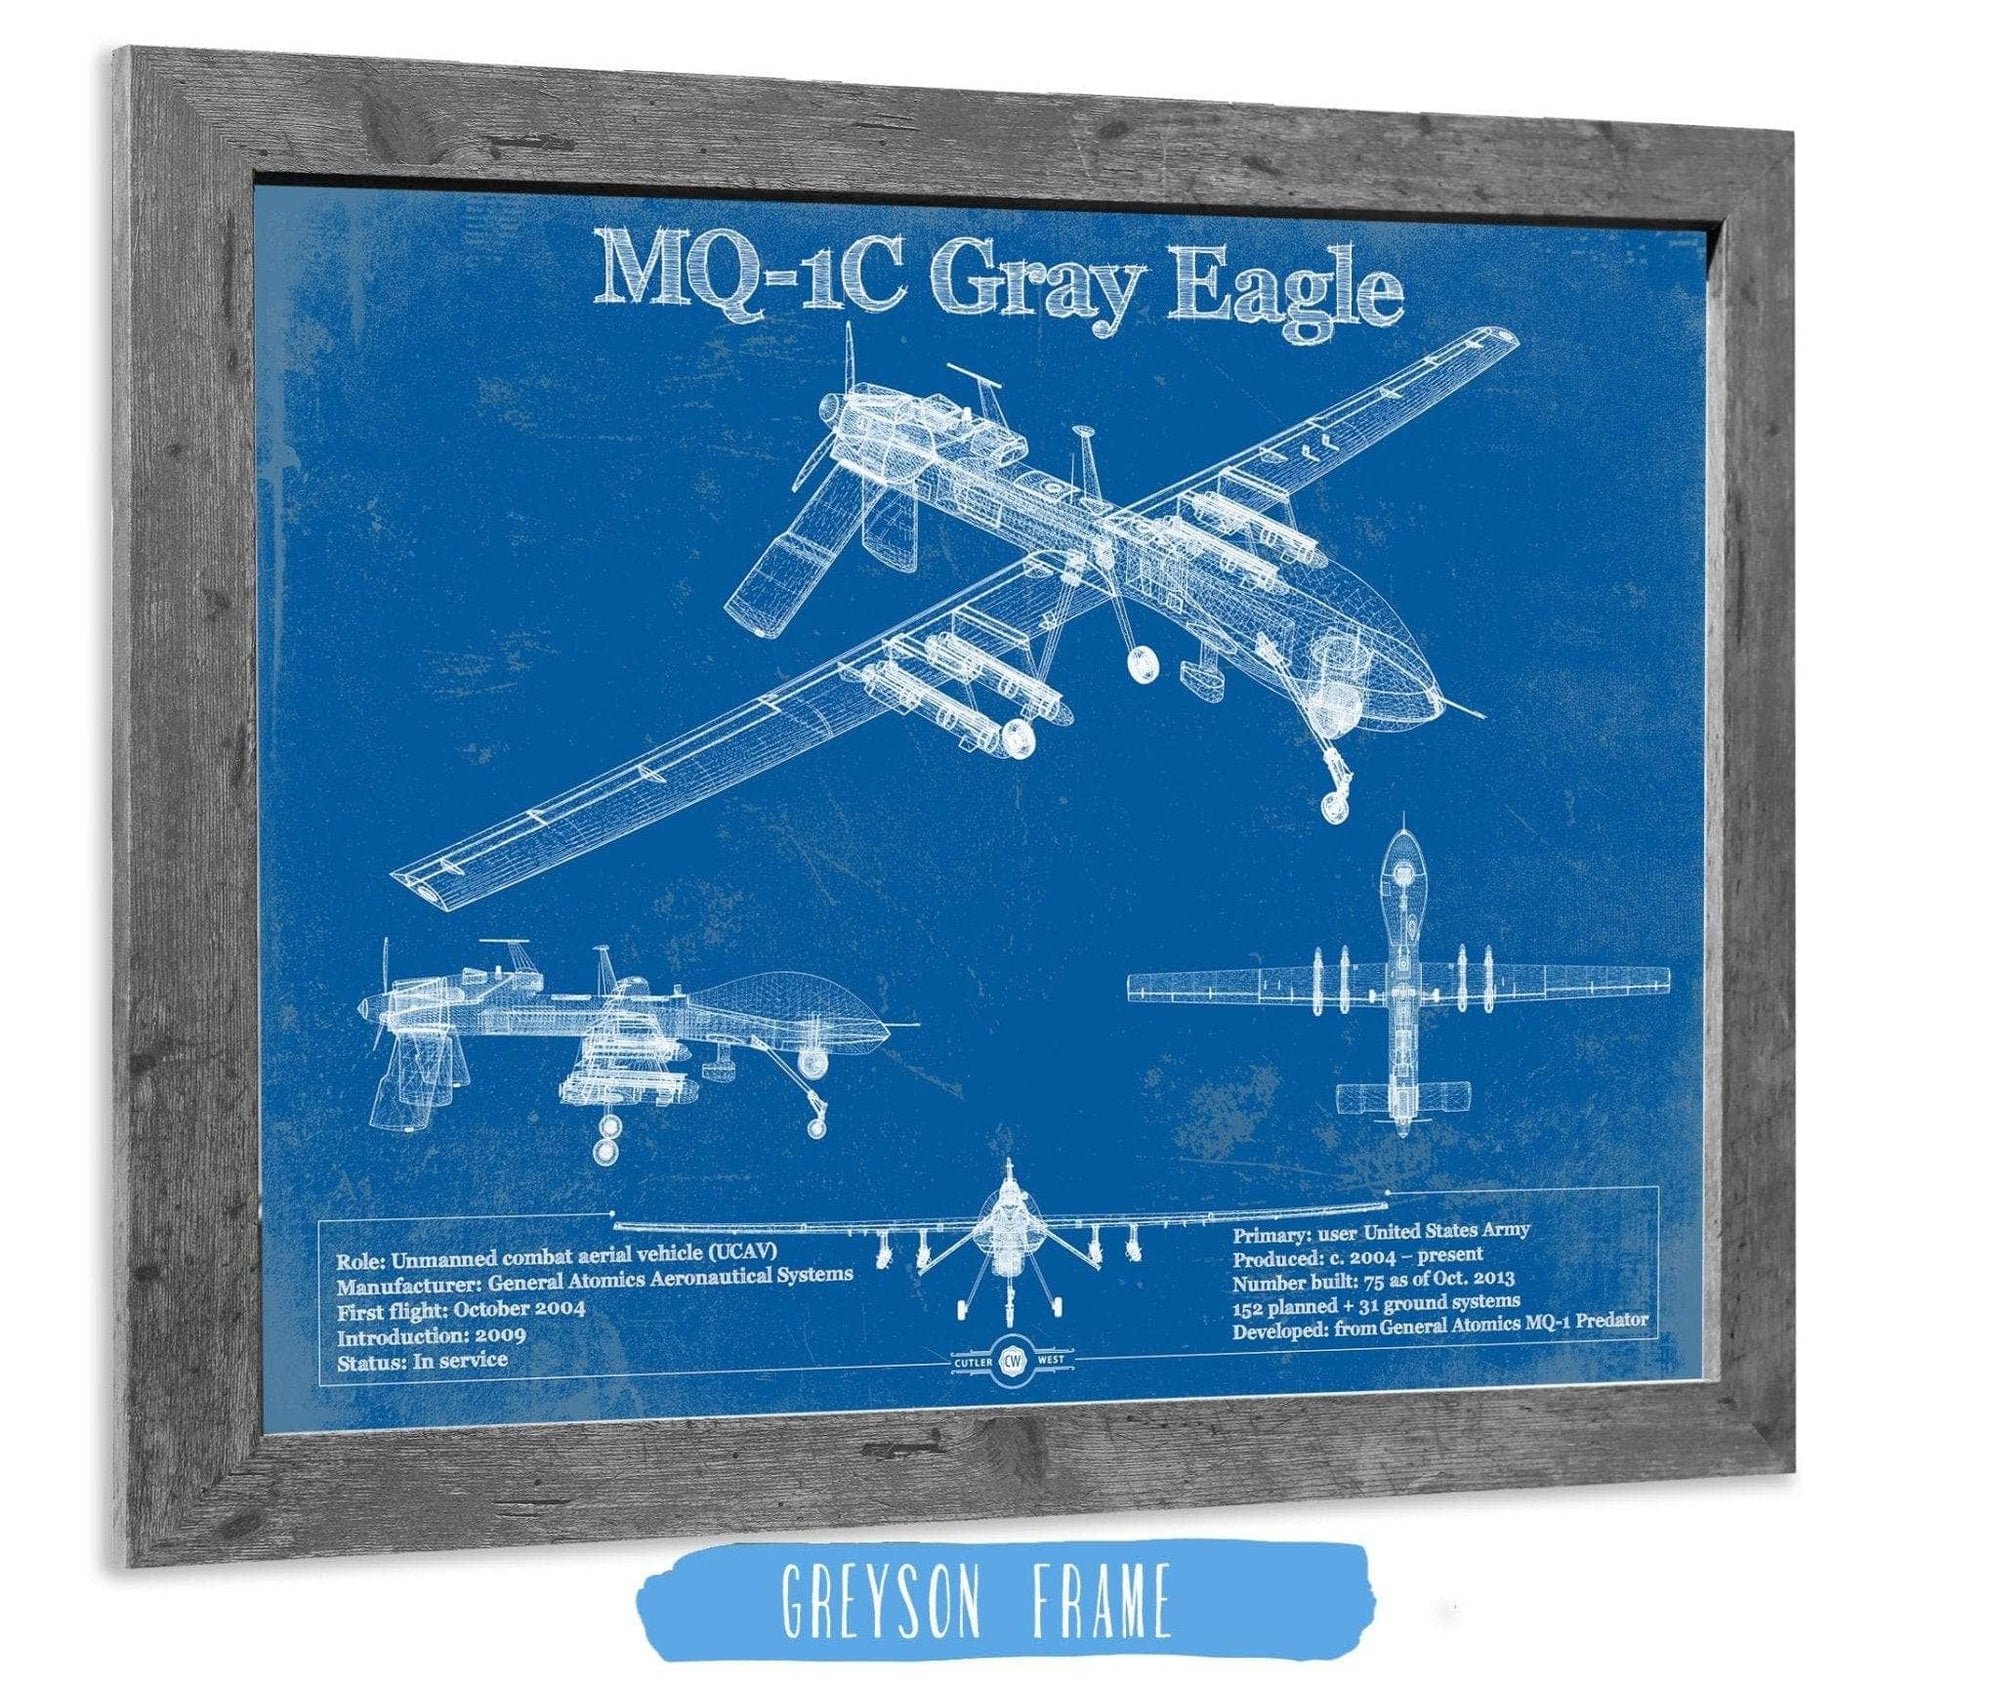 Cutler West Military Aircraft 14" x 11" / Greyson Frame UAV MQ-1C Gray Eagle Vintage Aviation Blueprint Military Print 933311094_19457